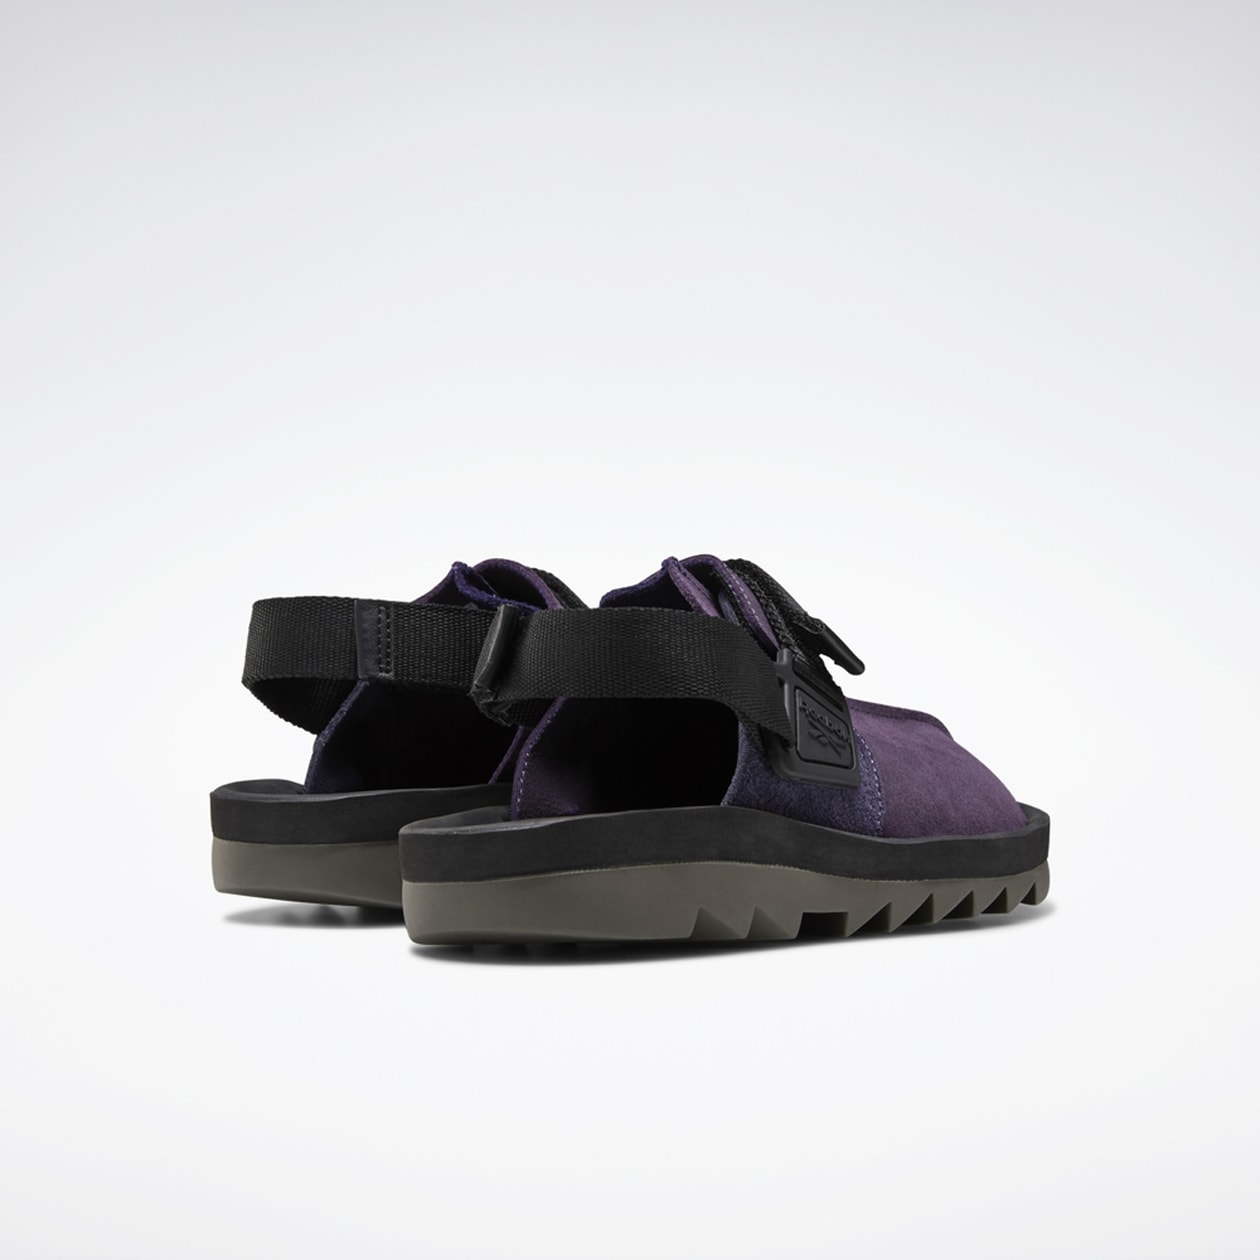 Reebok Beatnik Shoe History, Influence, Redesign nicole mclaughlin leo gamboa sneaker sandal colorway 2020